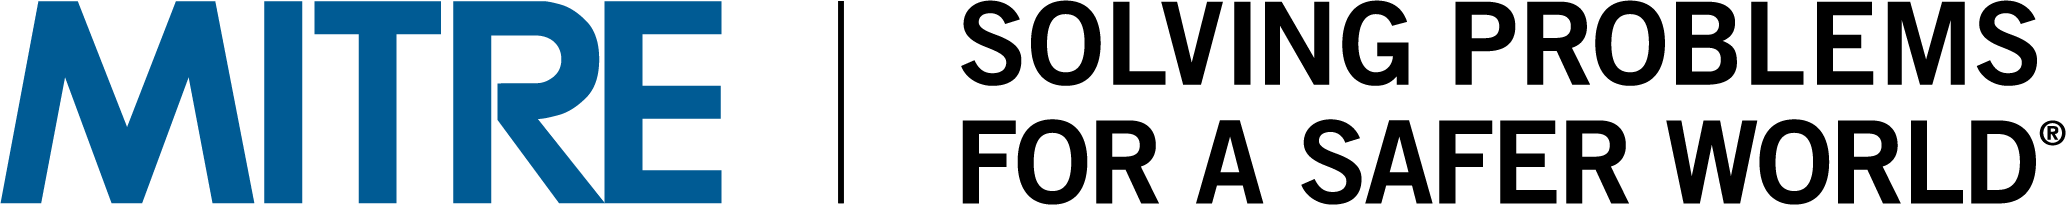 MITRE logo with tagline 